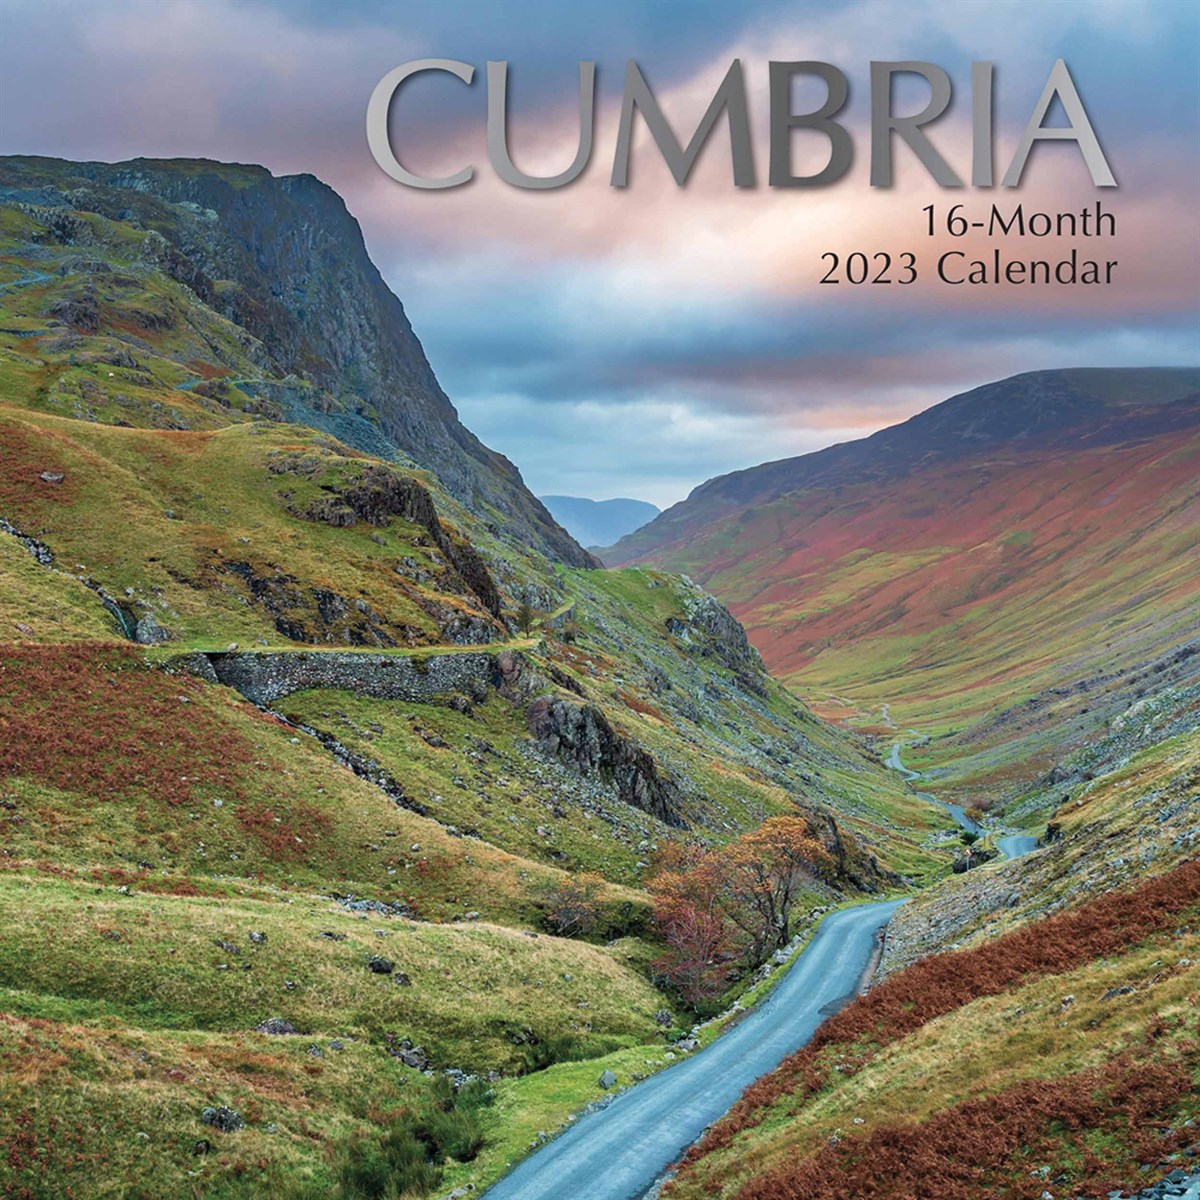 Cumbria 2023 Calendars